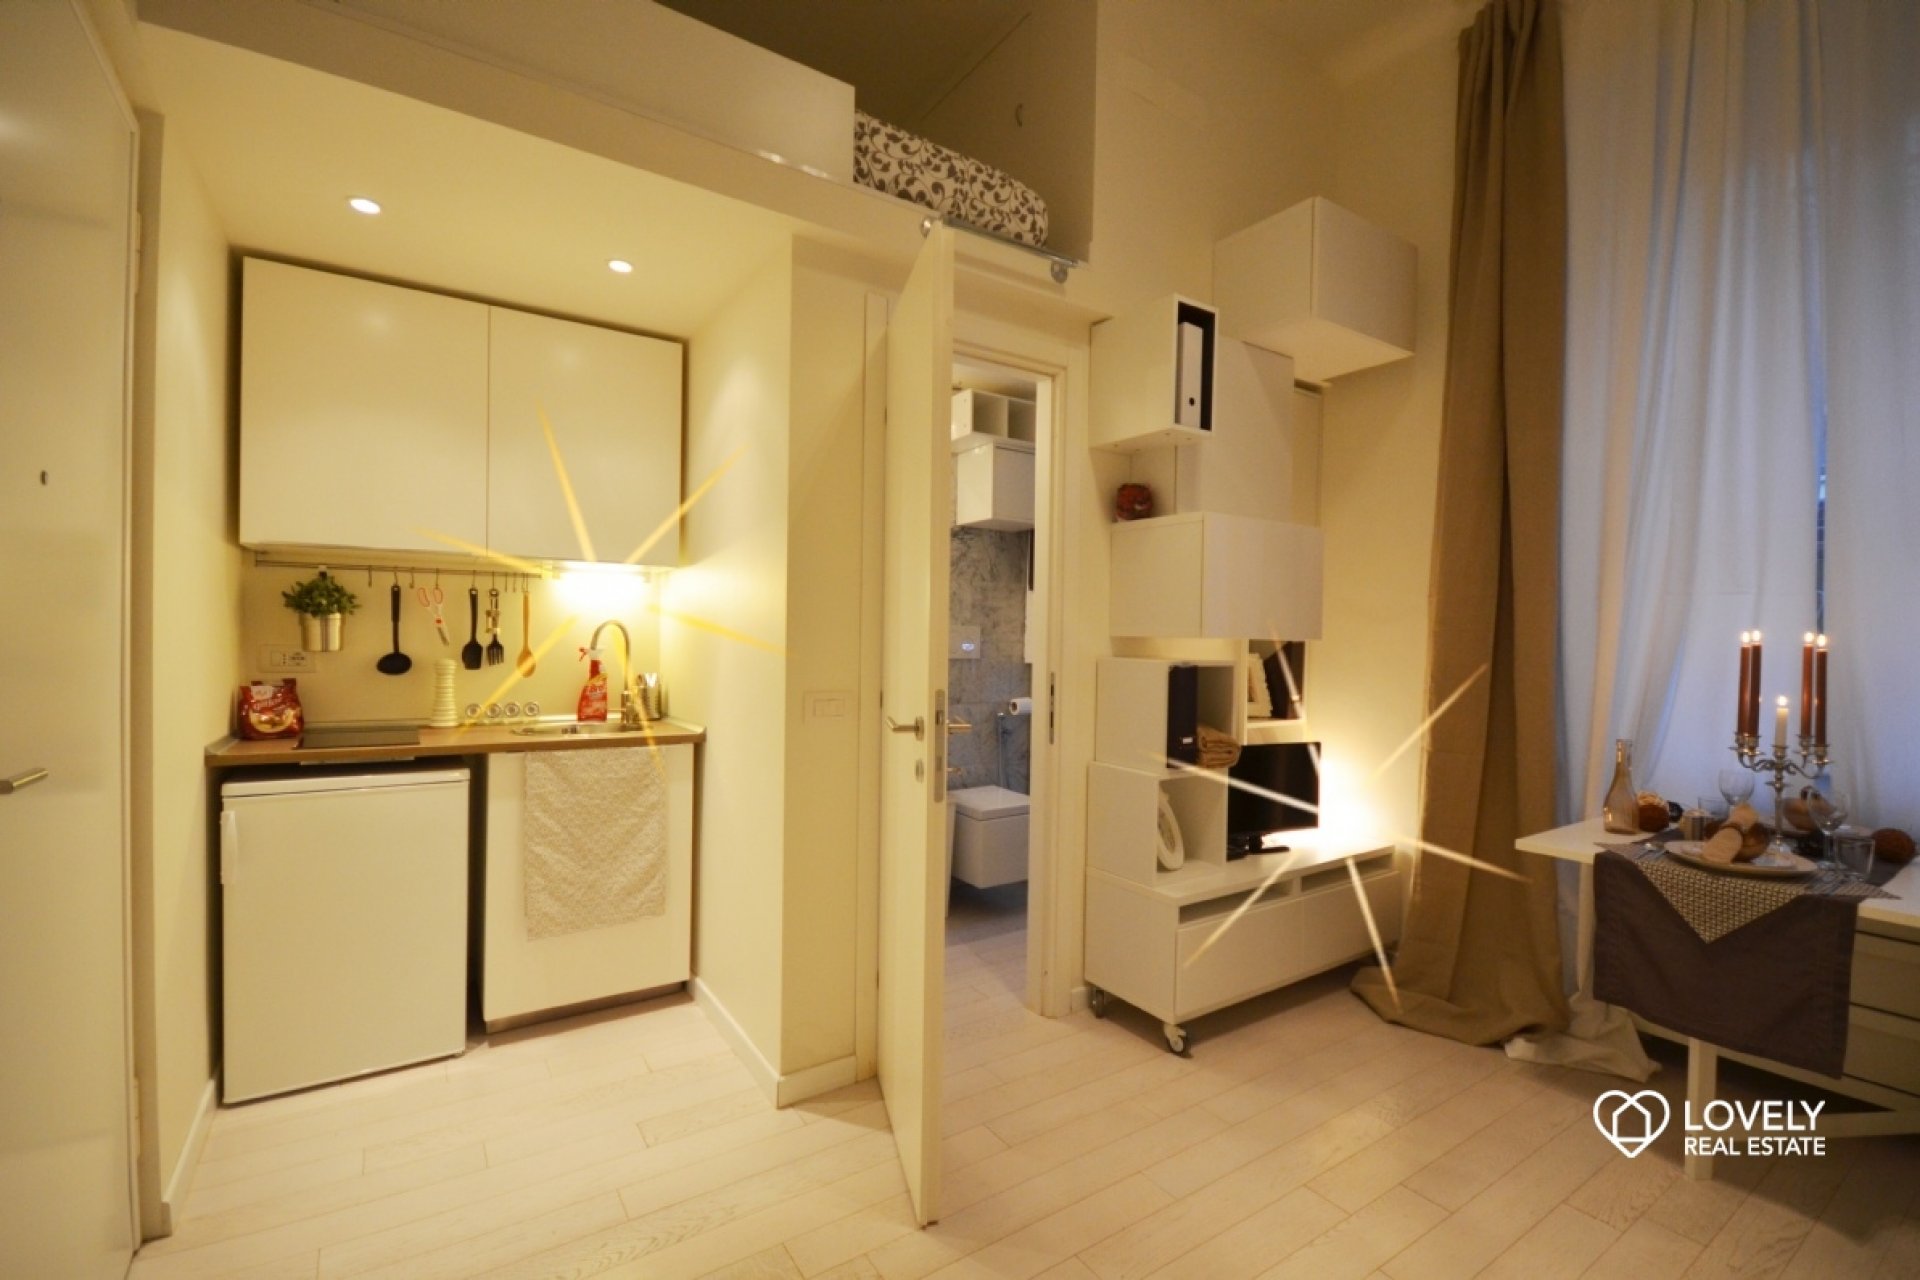 Affitto Apartment Milano - BEAUTIFUL APARTMENT CLOSE TO M2 PIOLA Locality Loreto - Piola - Lambrate